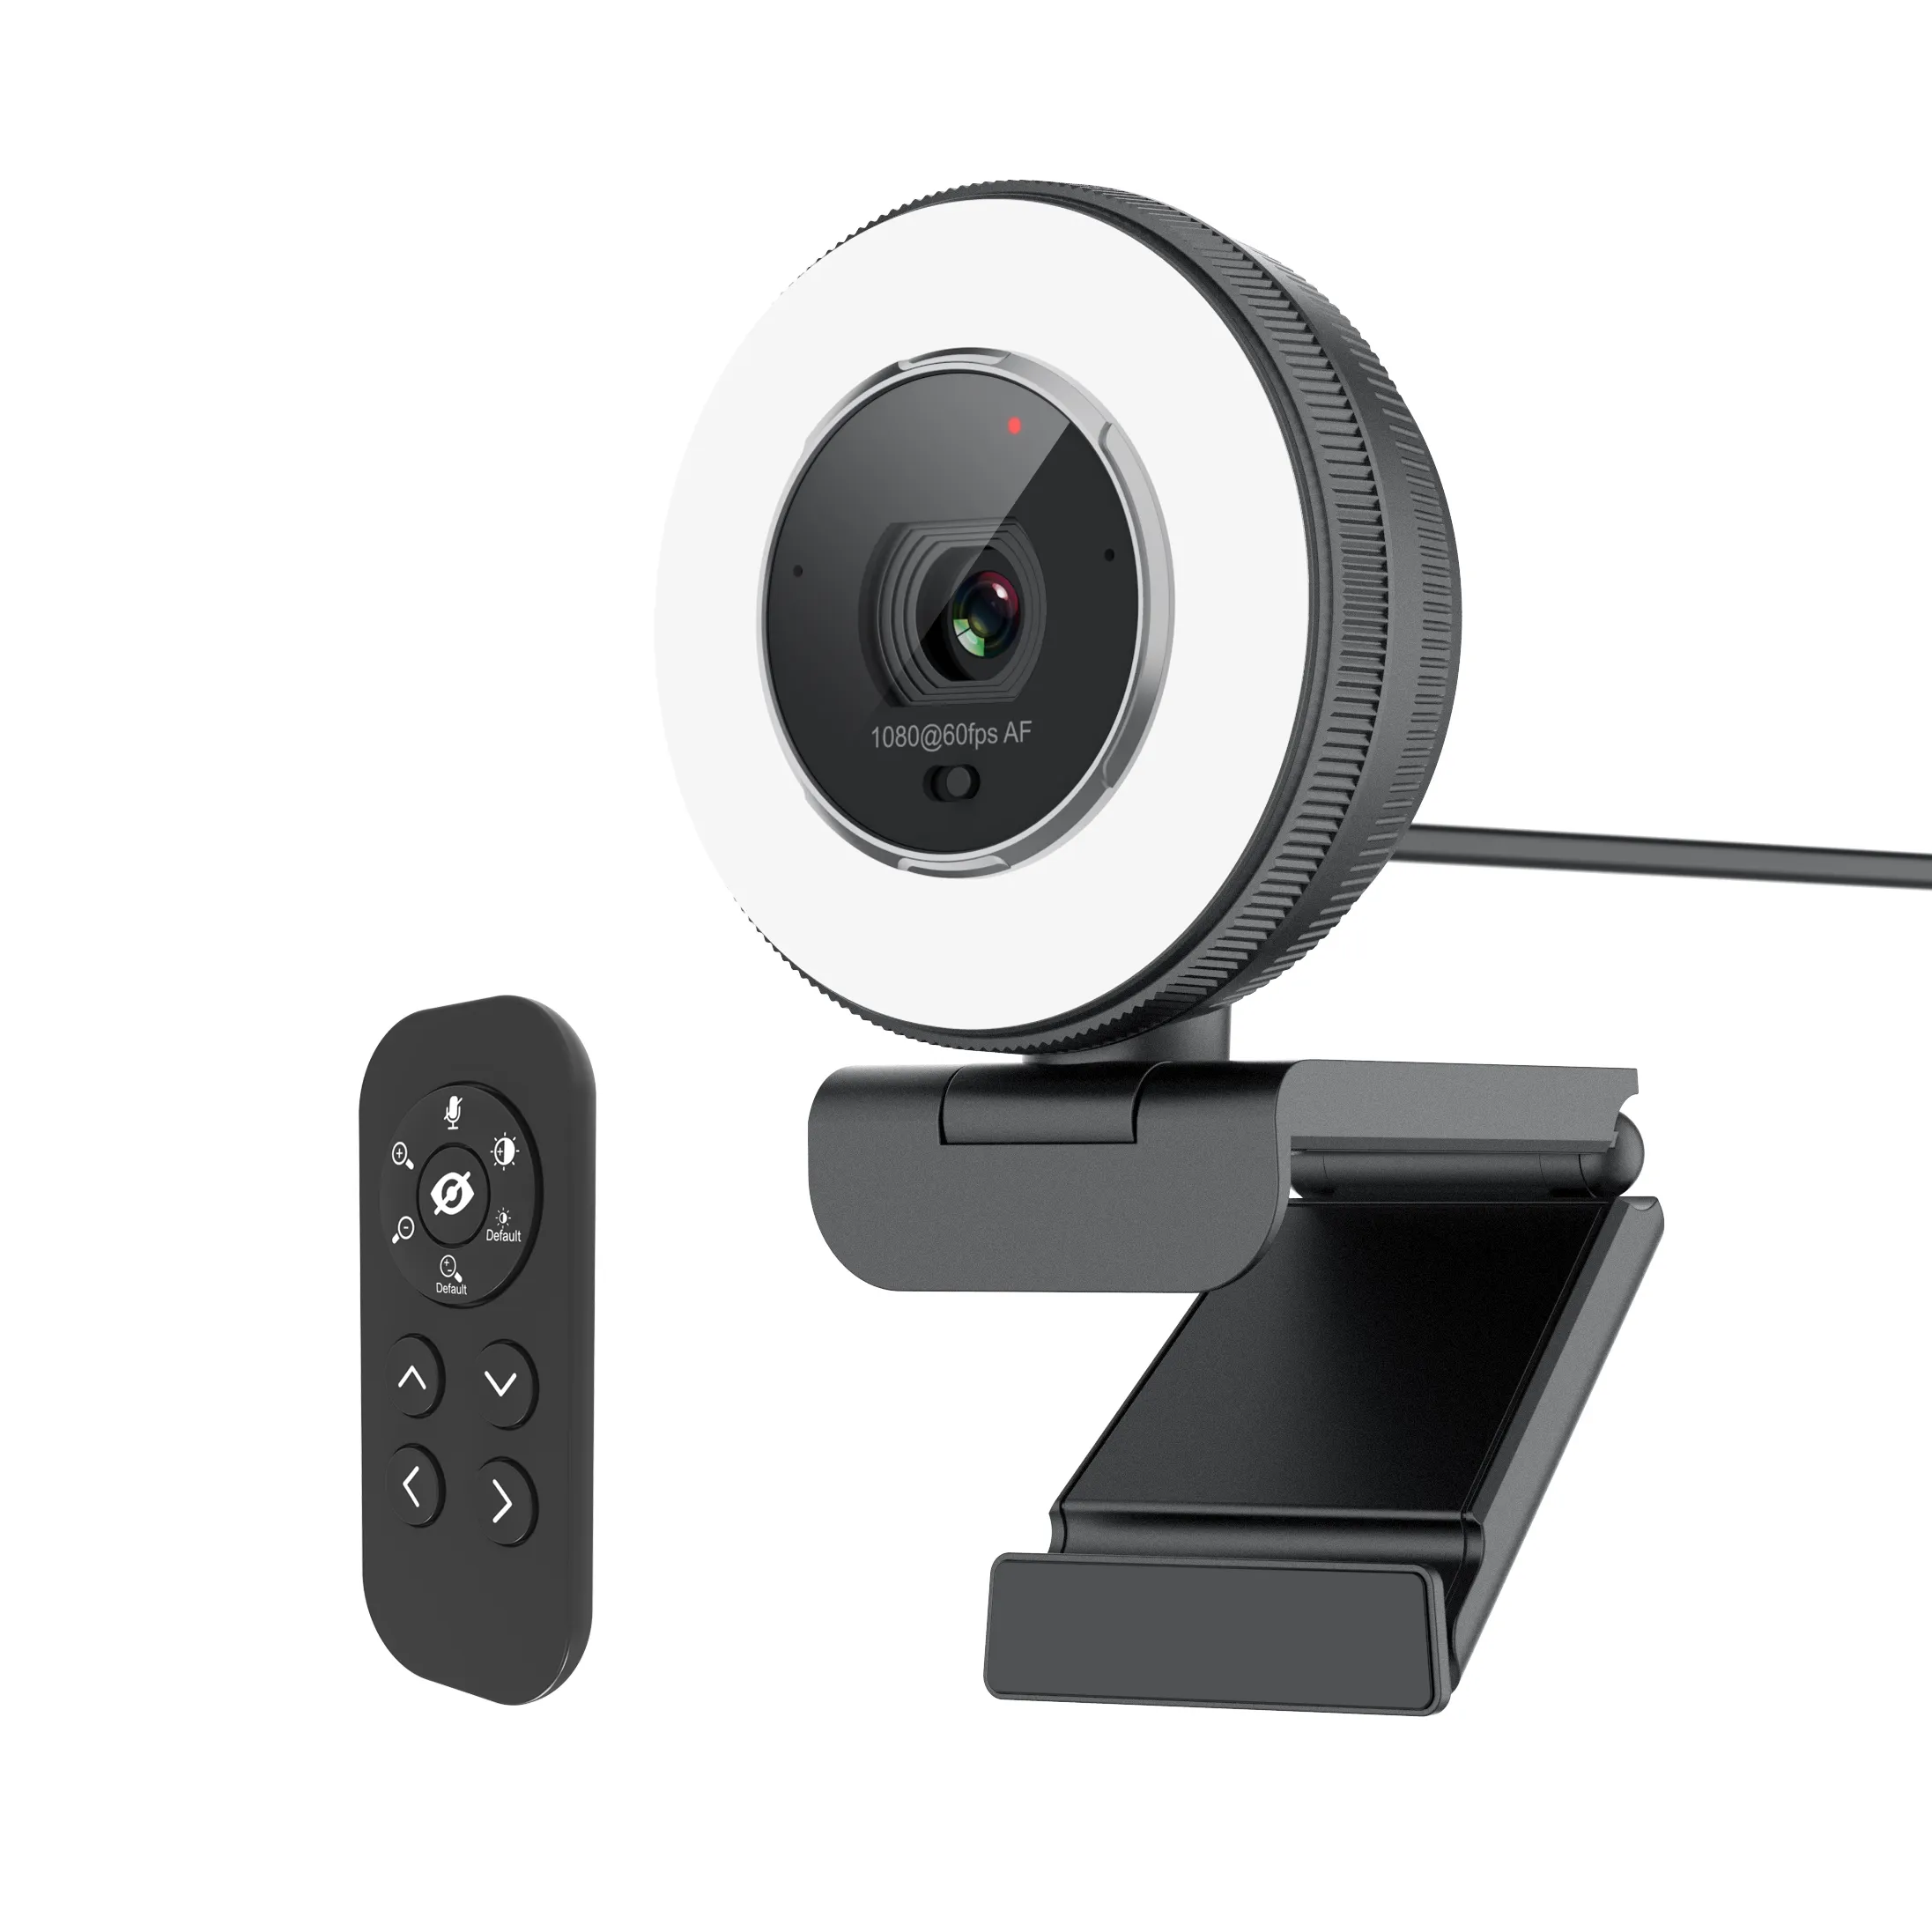 usb webcam 1080P remote control auto focusing FHD webcam conference camera digital zoom Webcam